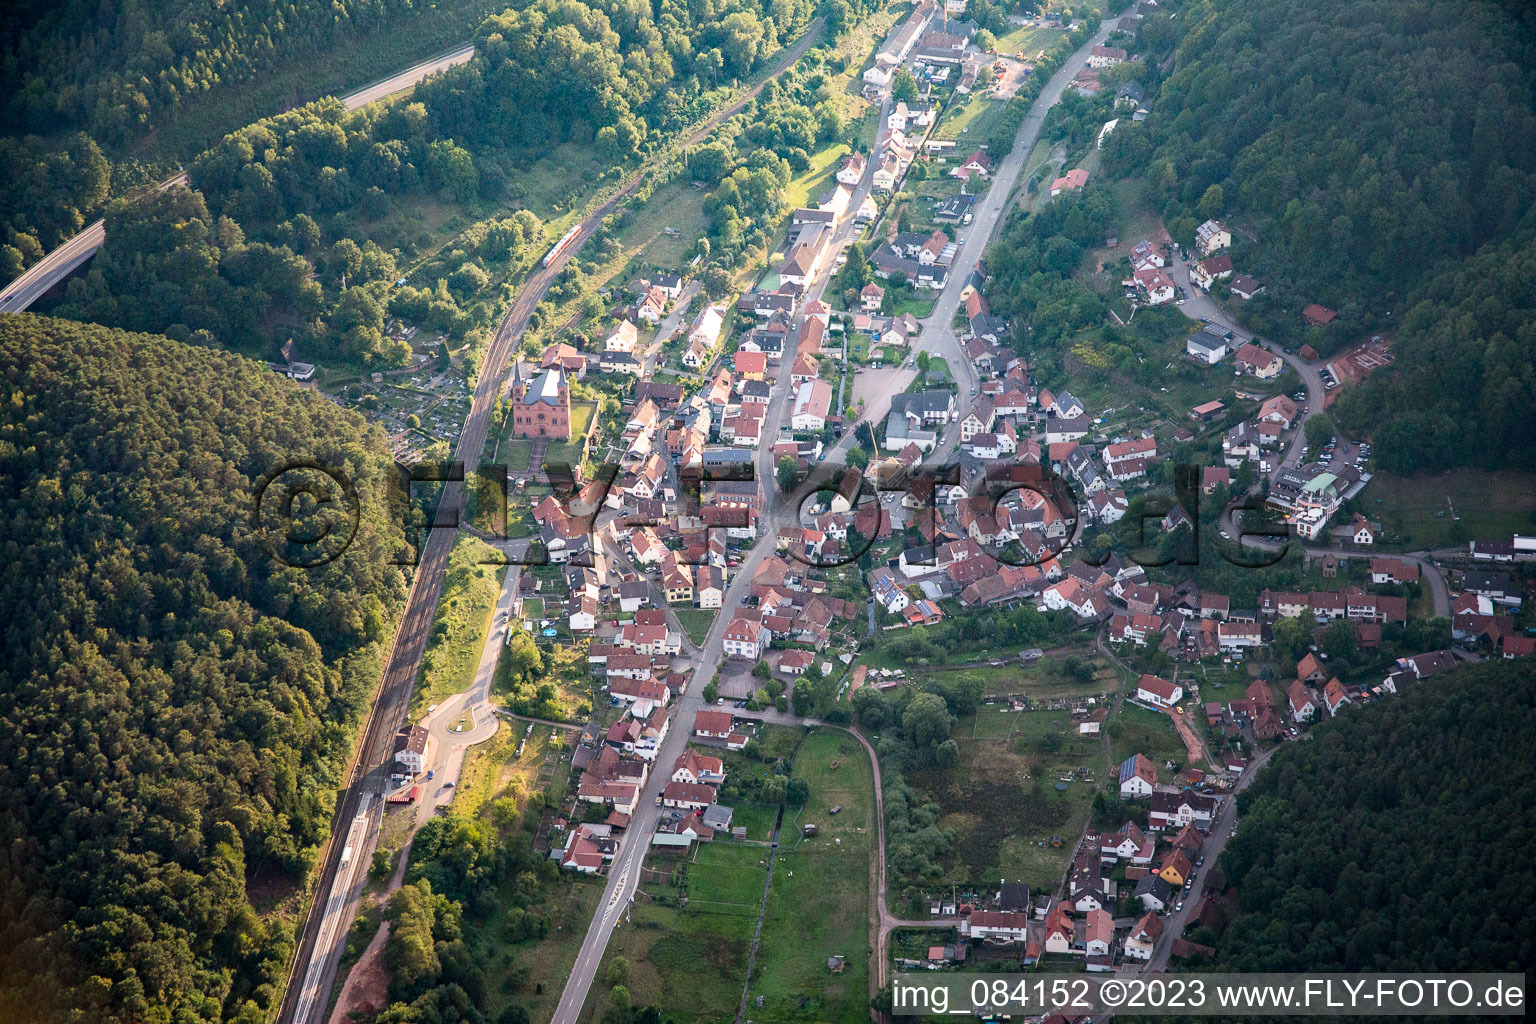 Aerial view of Wilgartswiesen in the state Rhineland-Palatinate, Germany